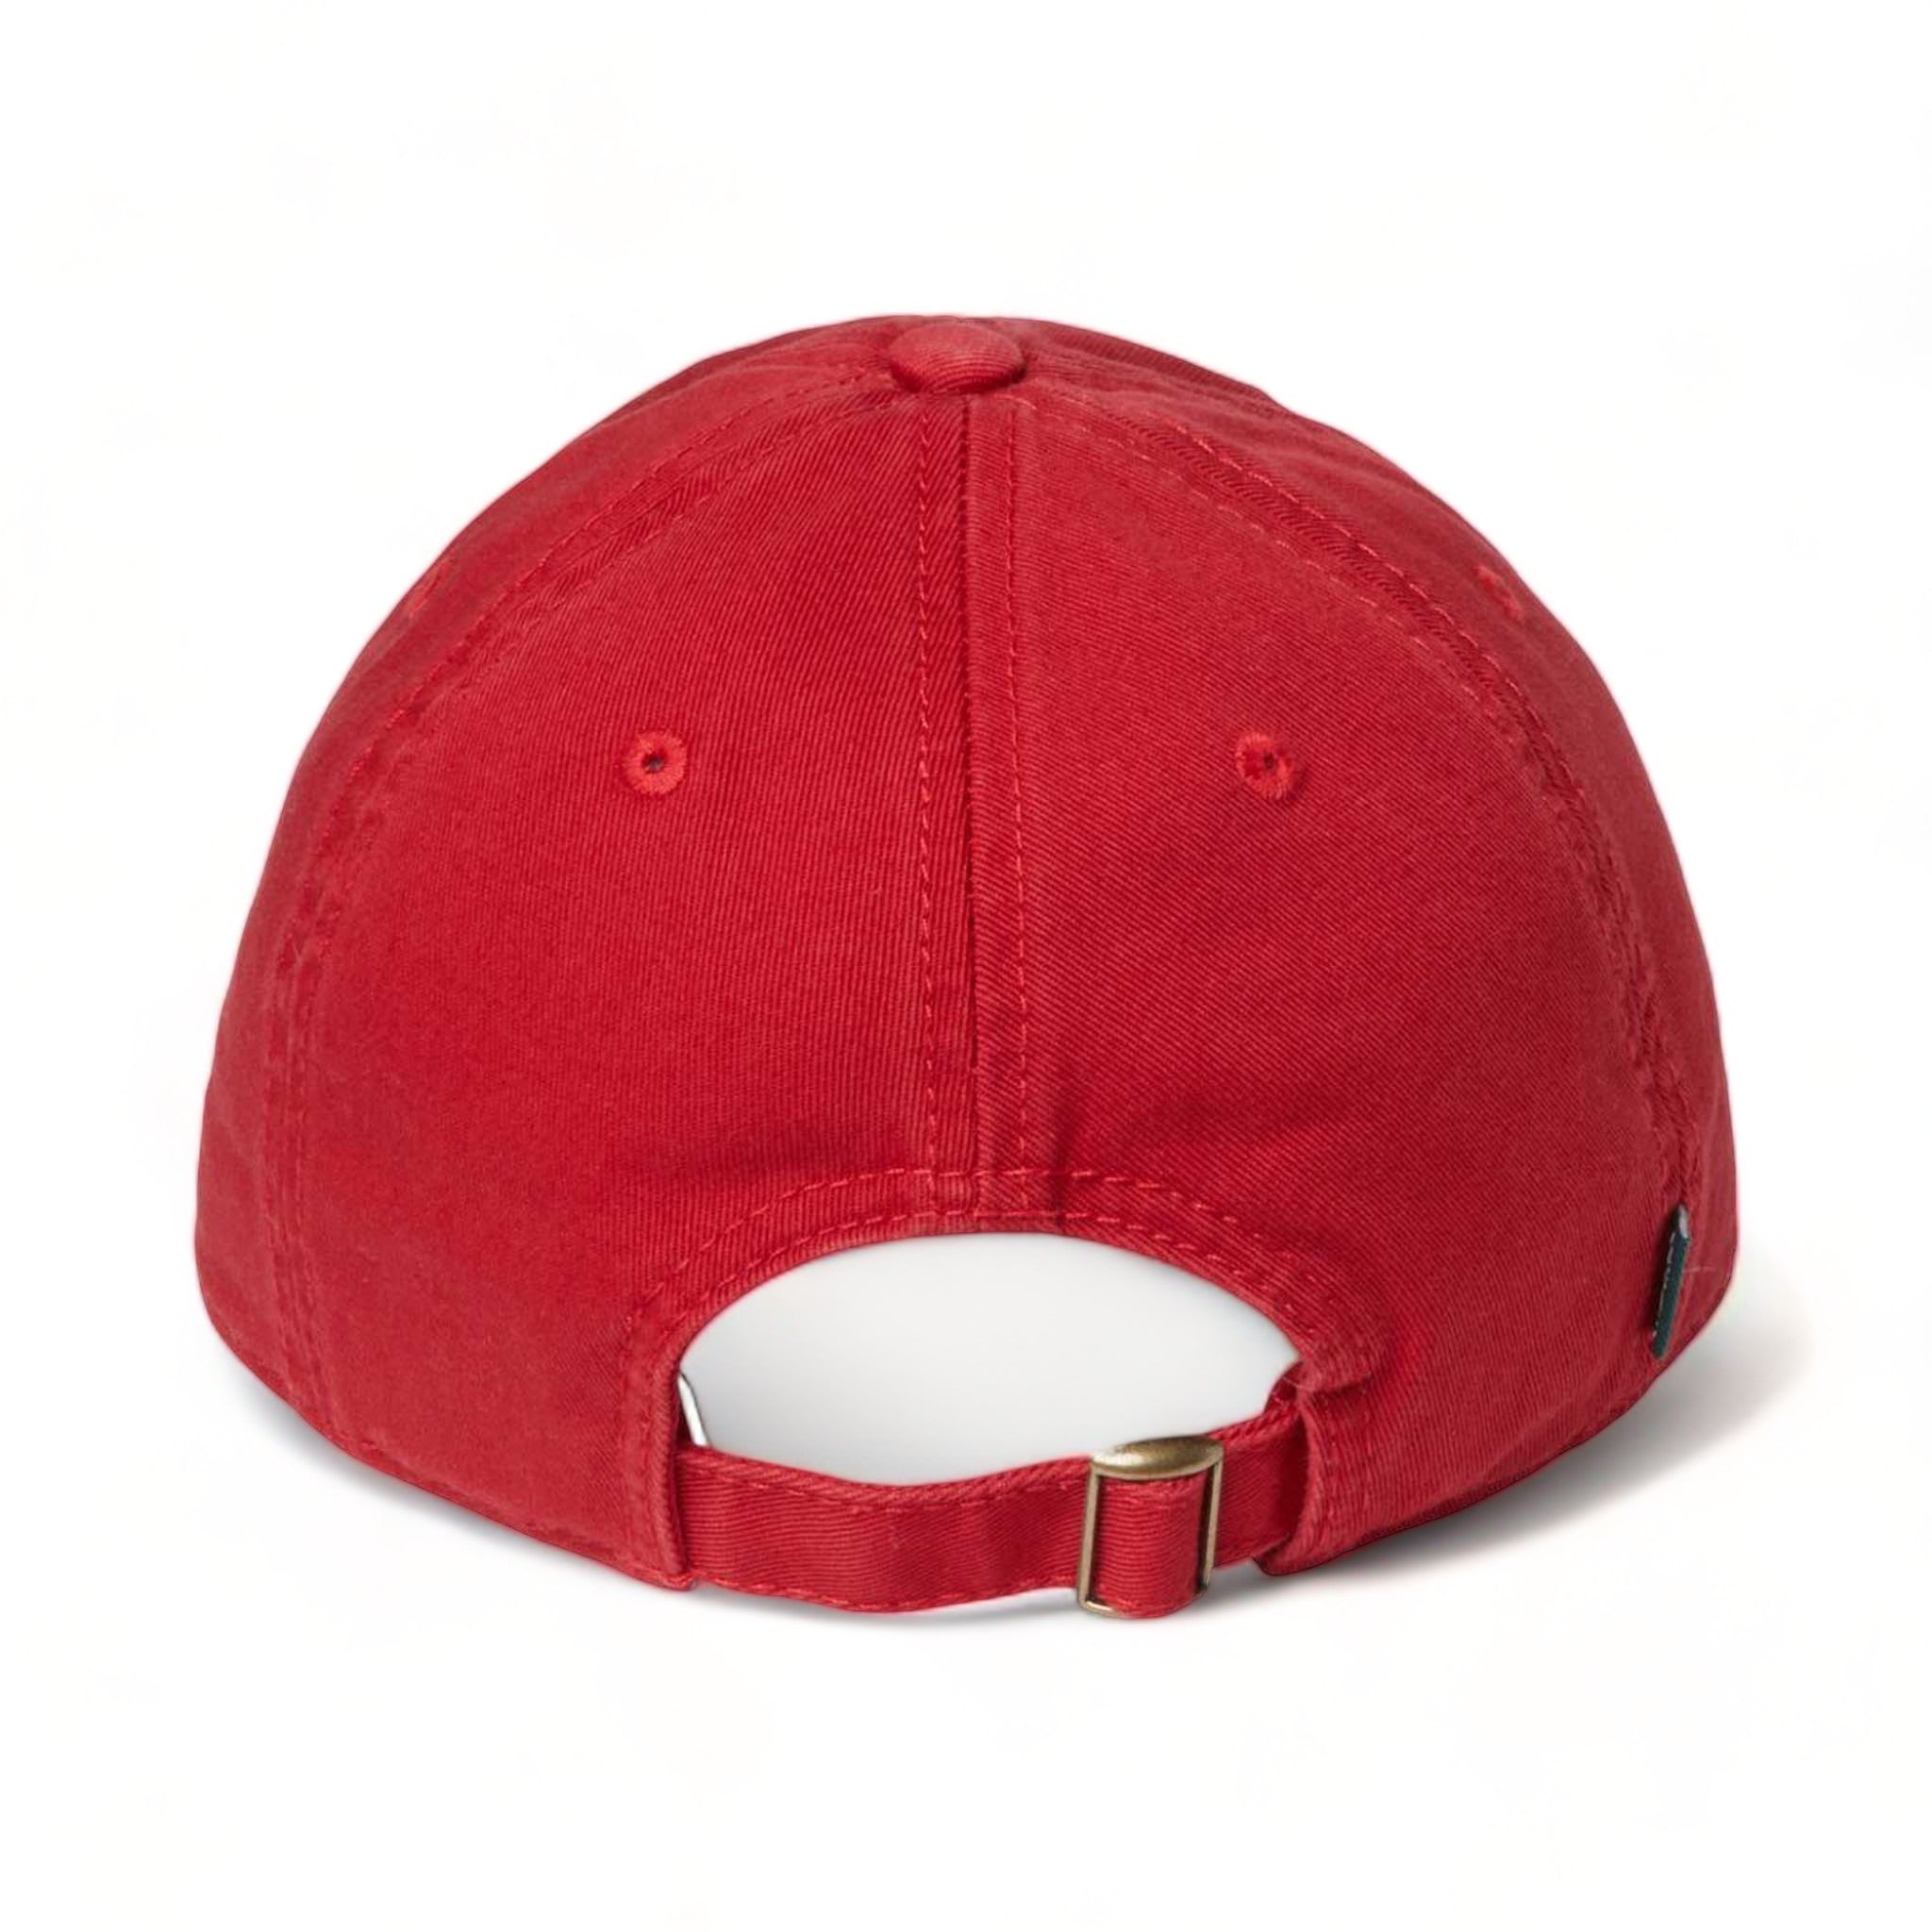 Back view of LEGACY EZA custom hat in scarlet